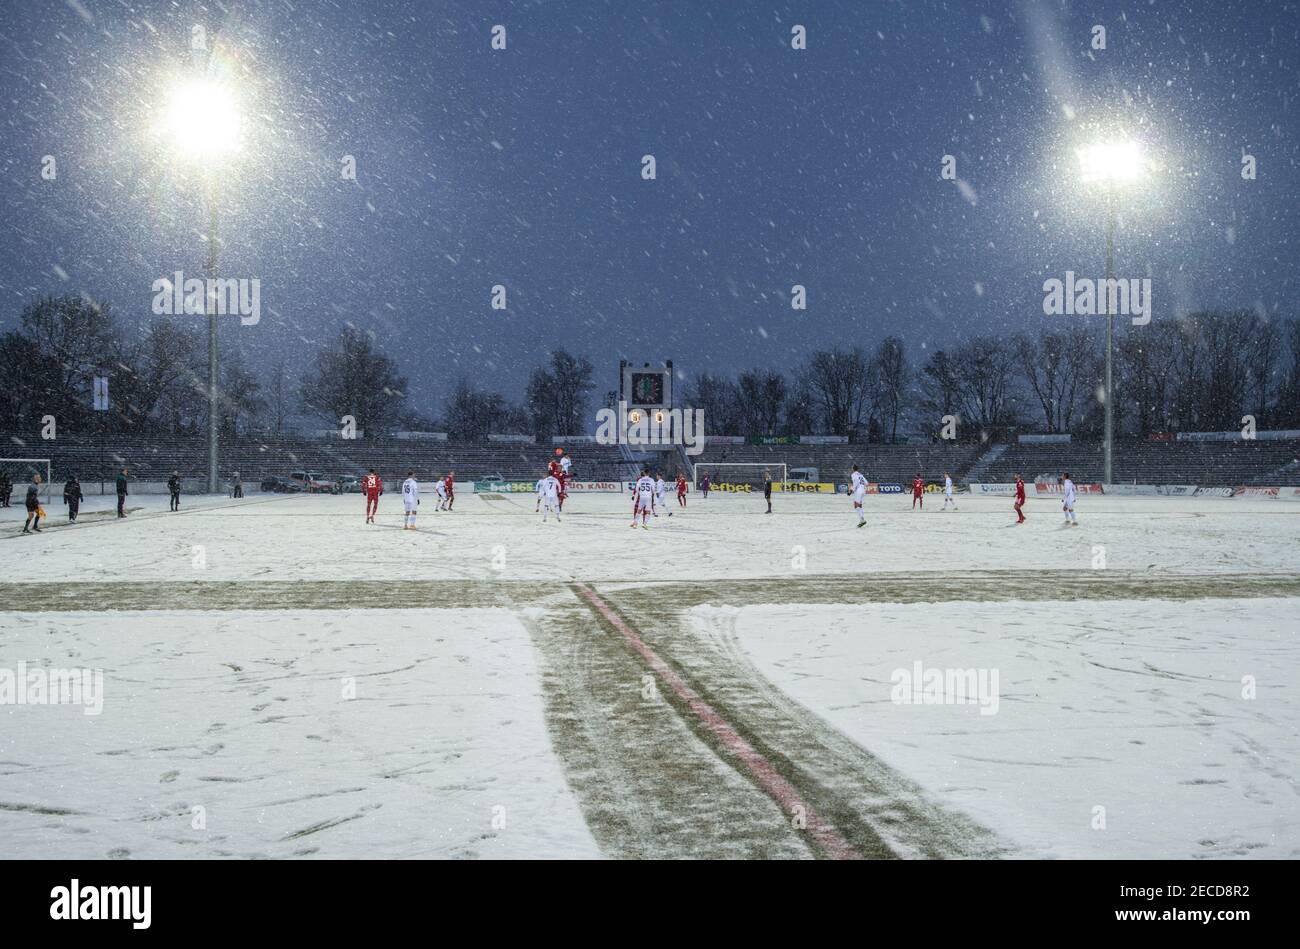 Sofia, Bulgaria - Feb 13 2021: Slavia stadium covered in snow during a football match between CSKA Sofia and Slavia Stock Photo